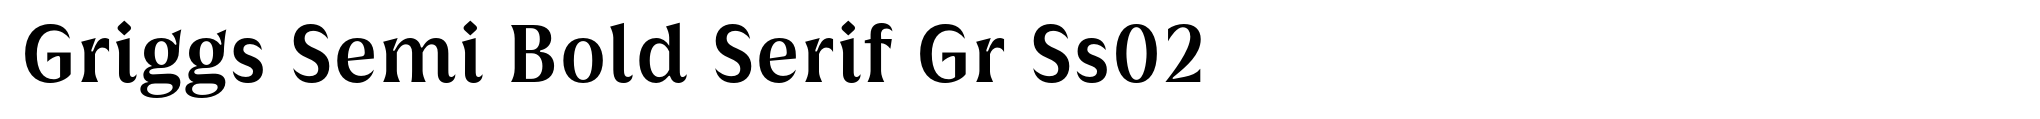 Griggs Semi Bold Serif Gr Ss02 image